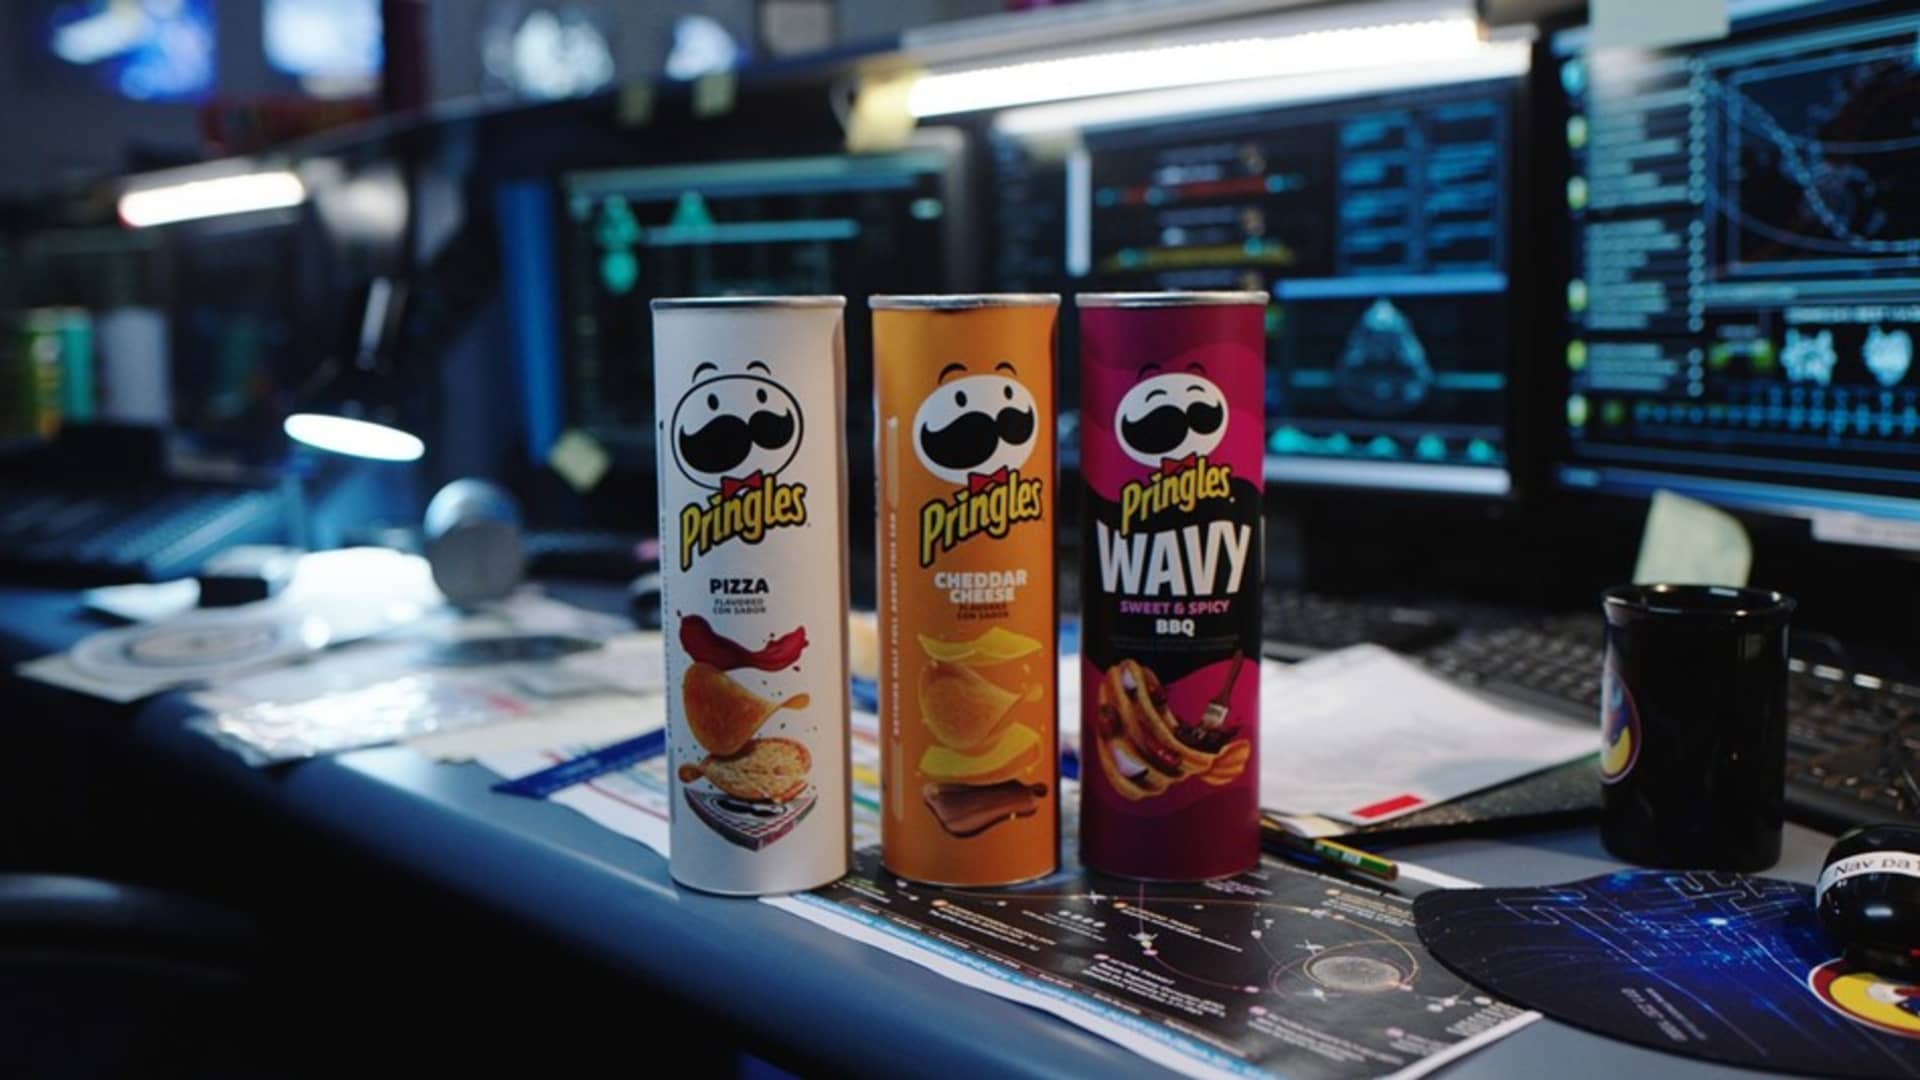 Pringles tubes for the brand's Super Bowl 2021 ad.